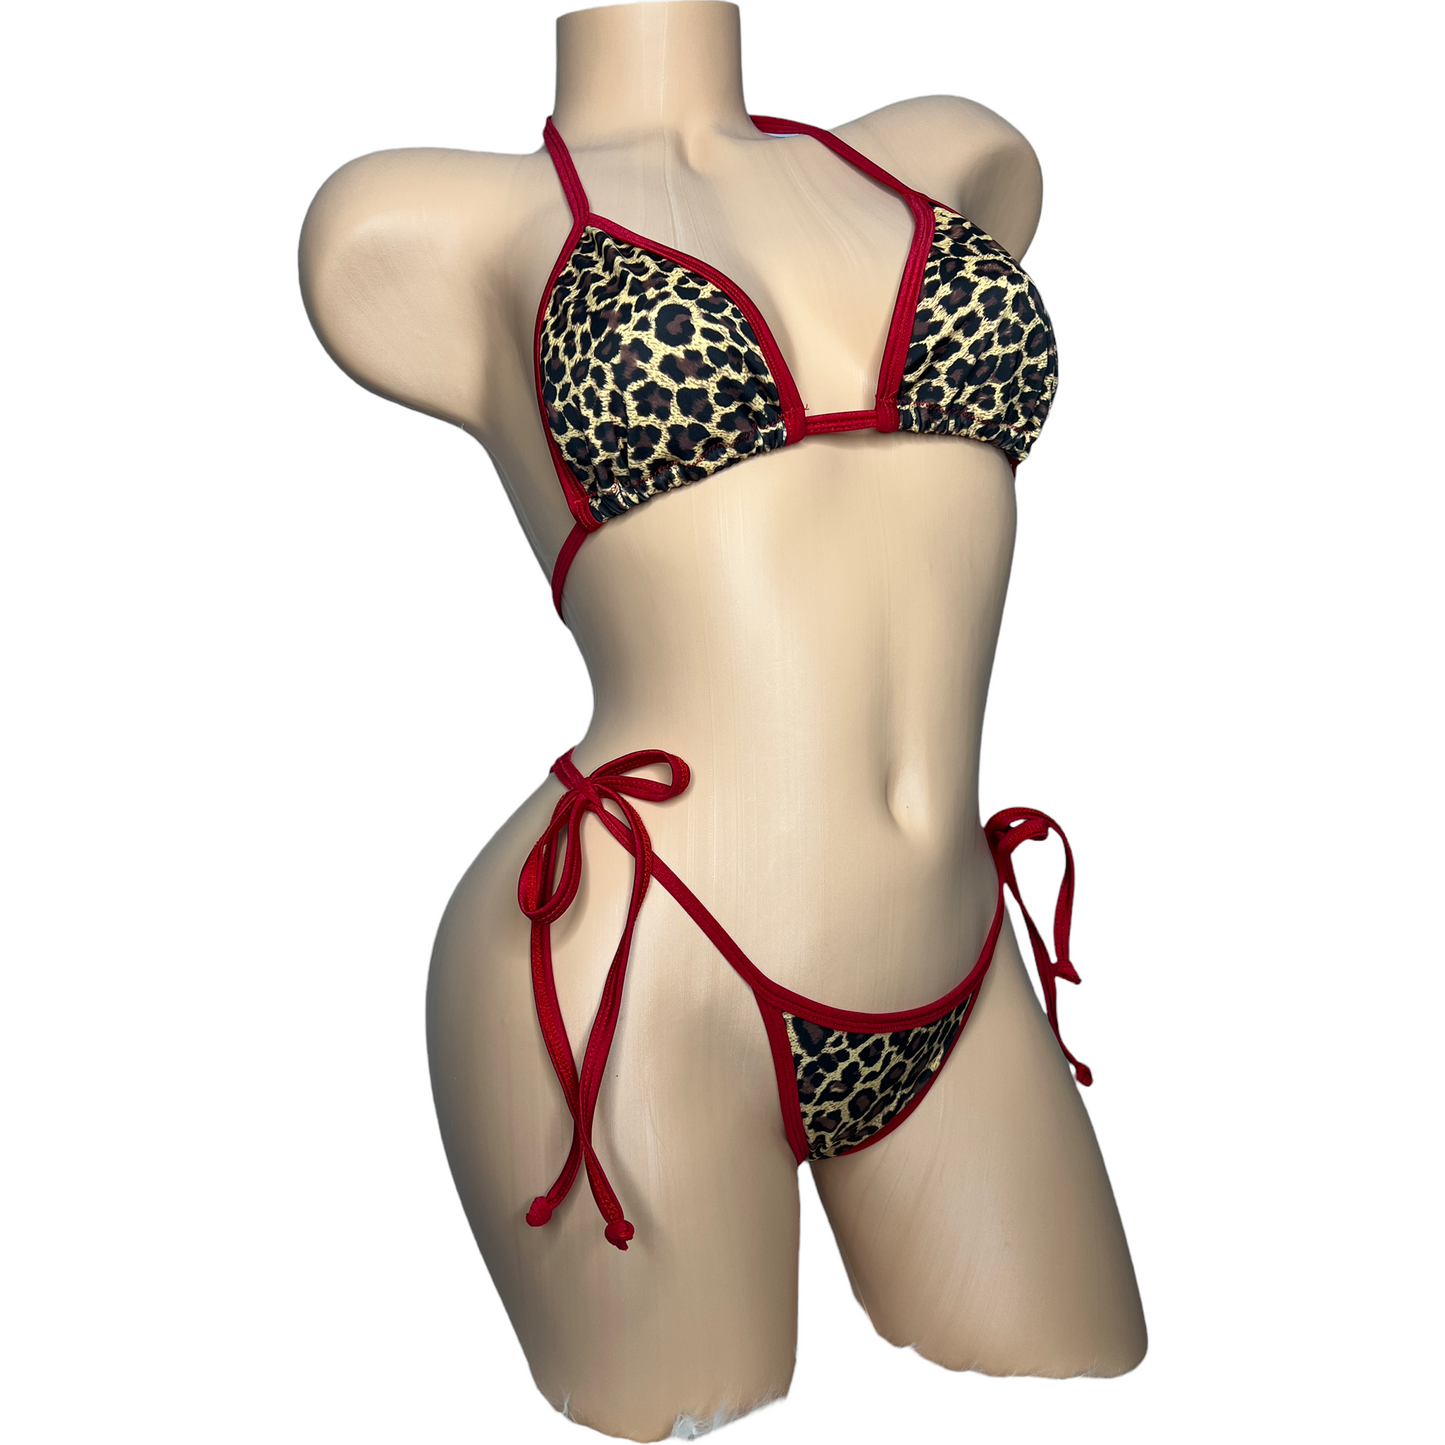 Red Cheetah posing bikini with bling